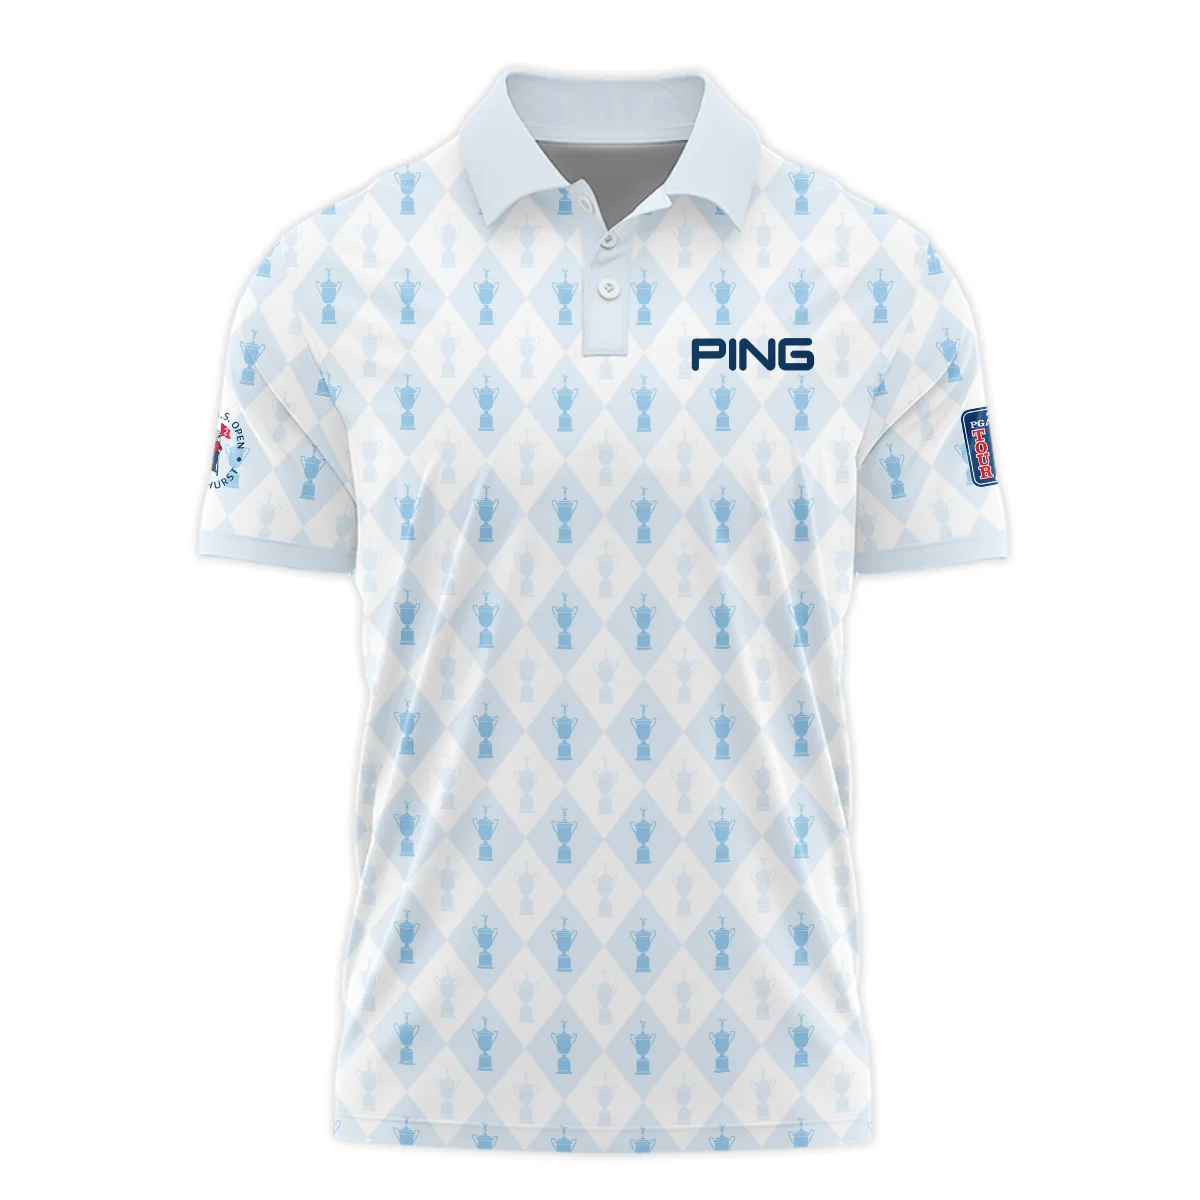 PGA Tour 124th U.S. Open Pinehurst Ping Zipper Hoodie Shirt Sports Pattern Cup Color Light Blue Zipper Hoodie Shirt